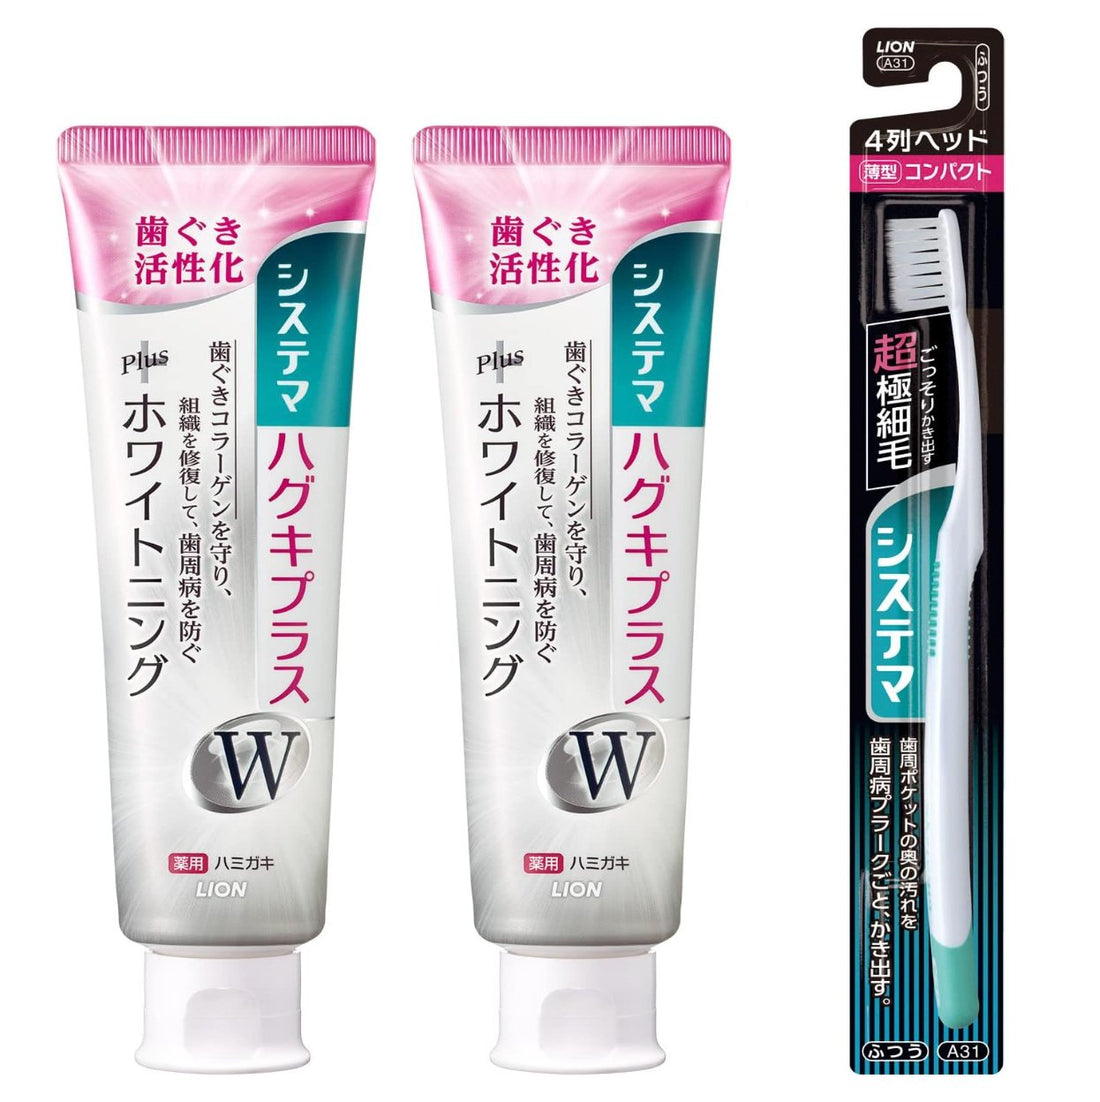 Systema Haguki Plus W (Whitening) [Quasi-drug] Toothpaste, Toothpaste, Periodontal Disease, Whitening, Fluorine, 95g x 2 + Toothbrush Included - NihonMura